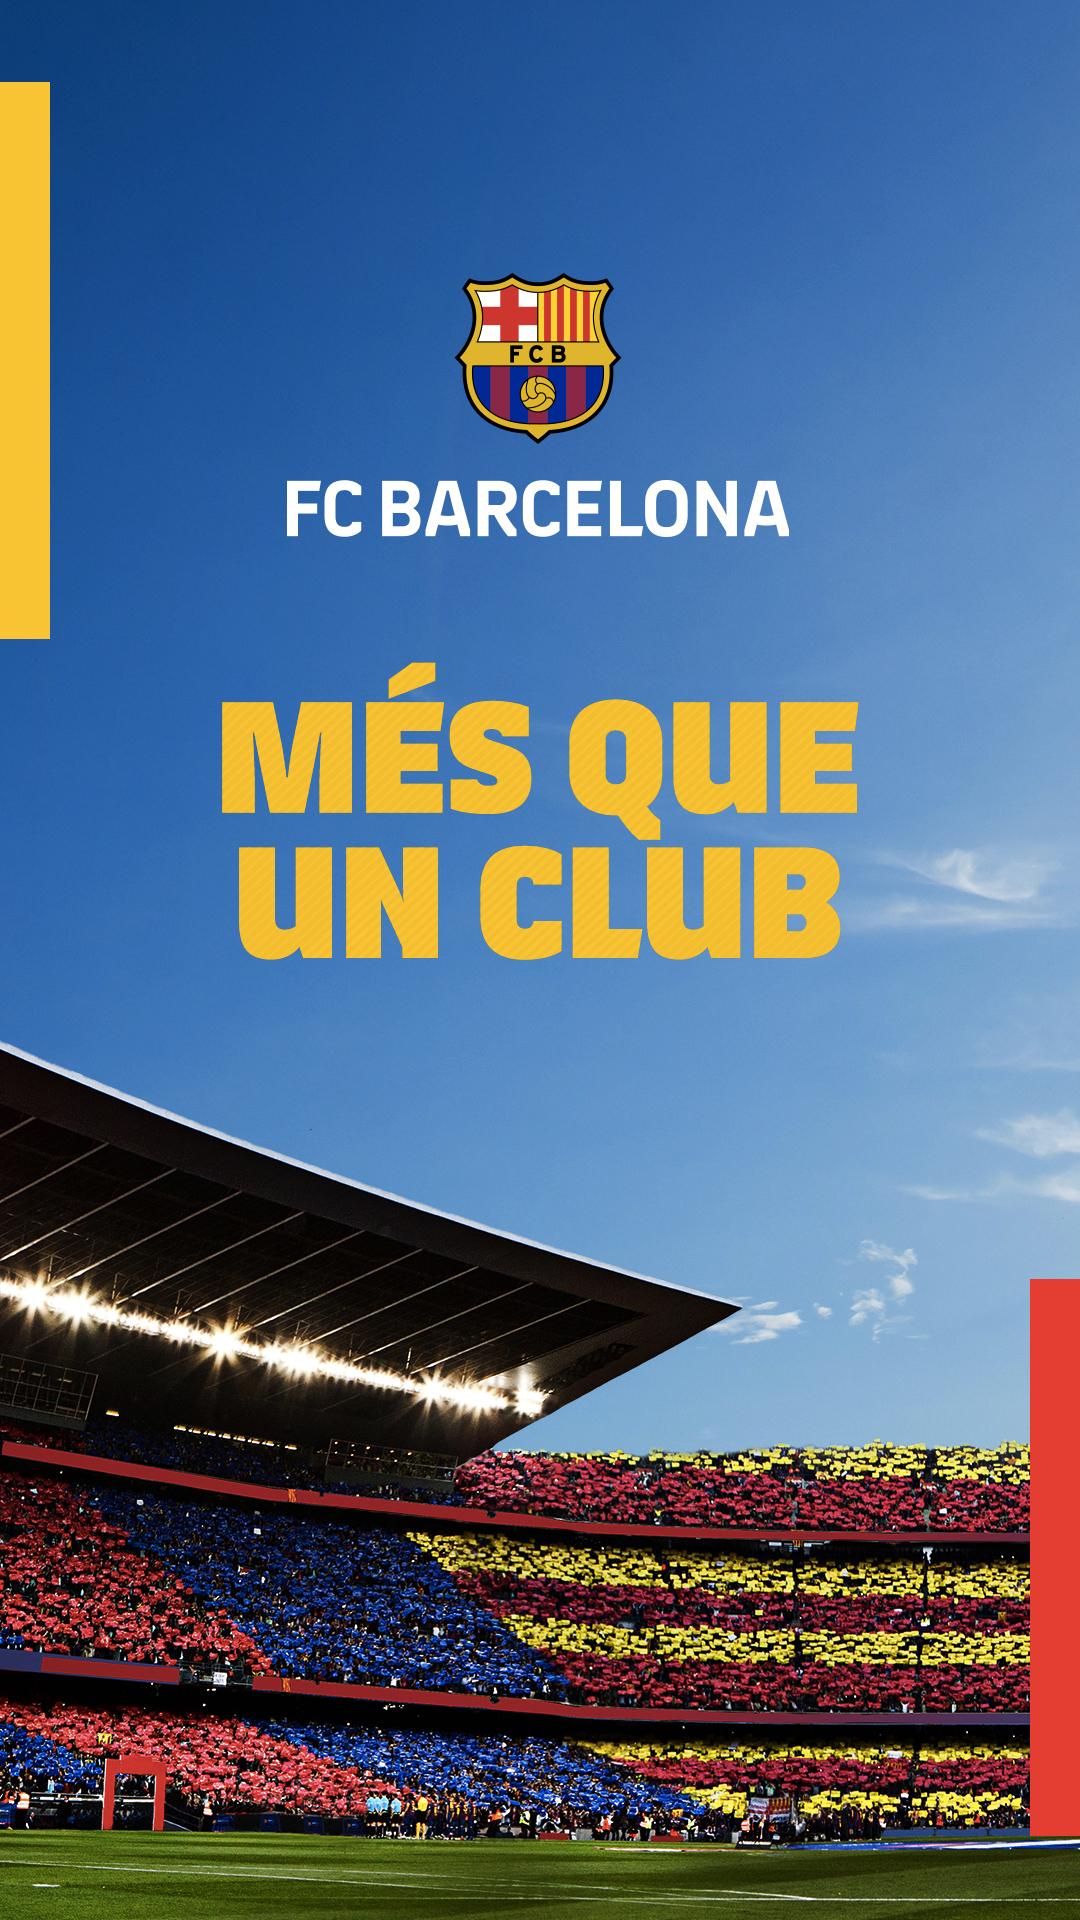 Fc Barcelona Wallpaper Iphone 7